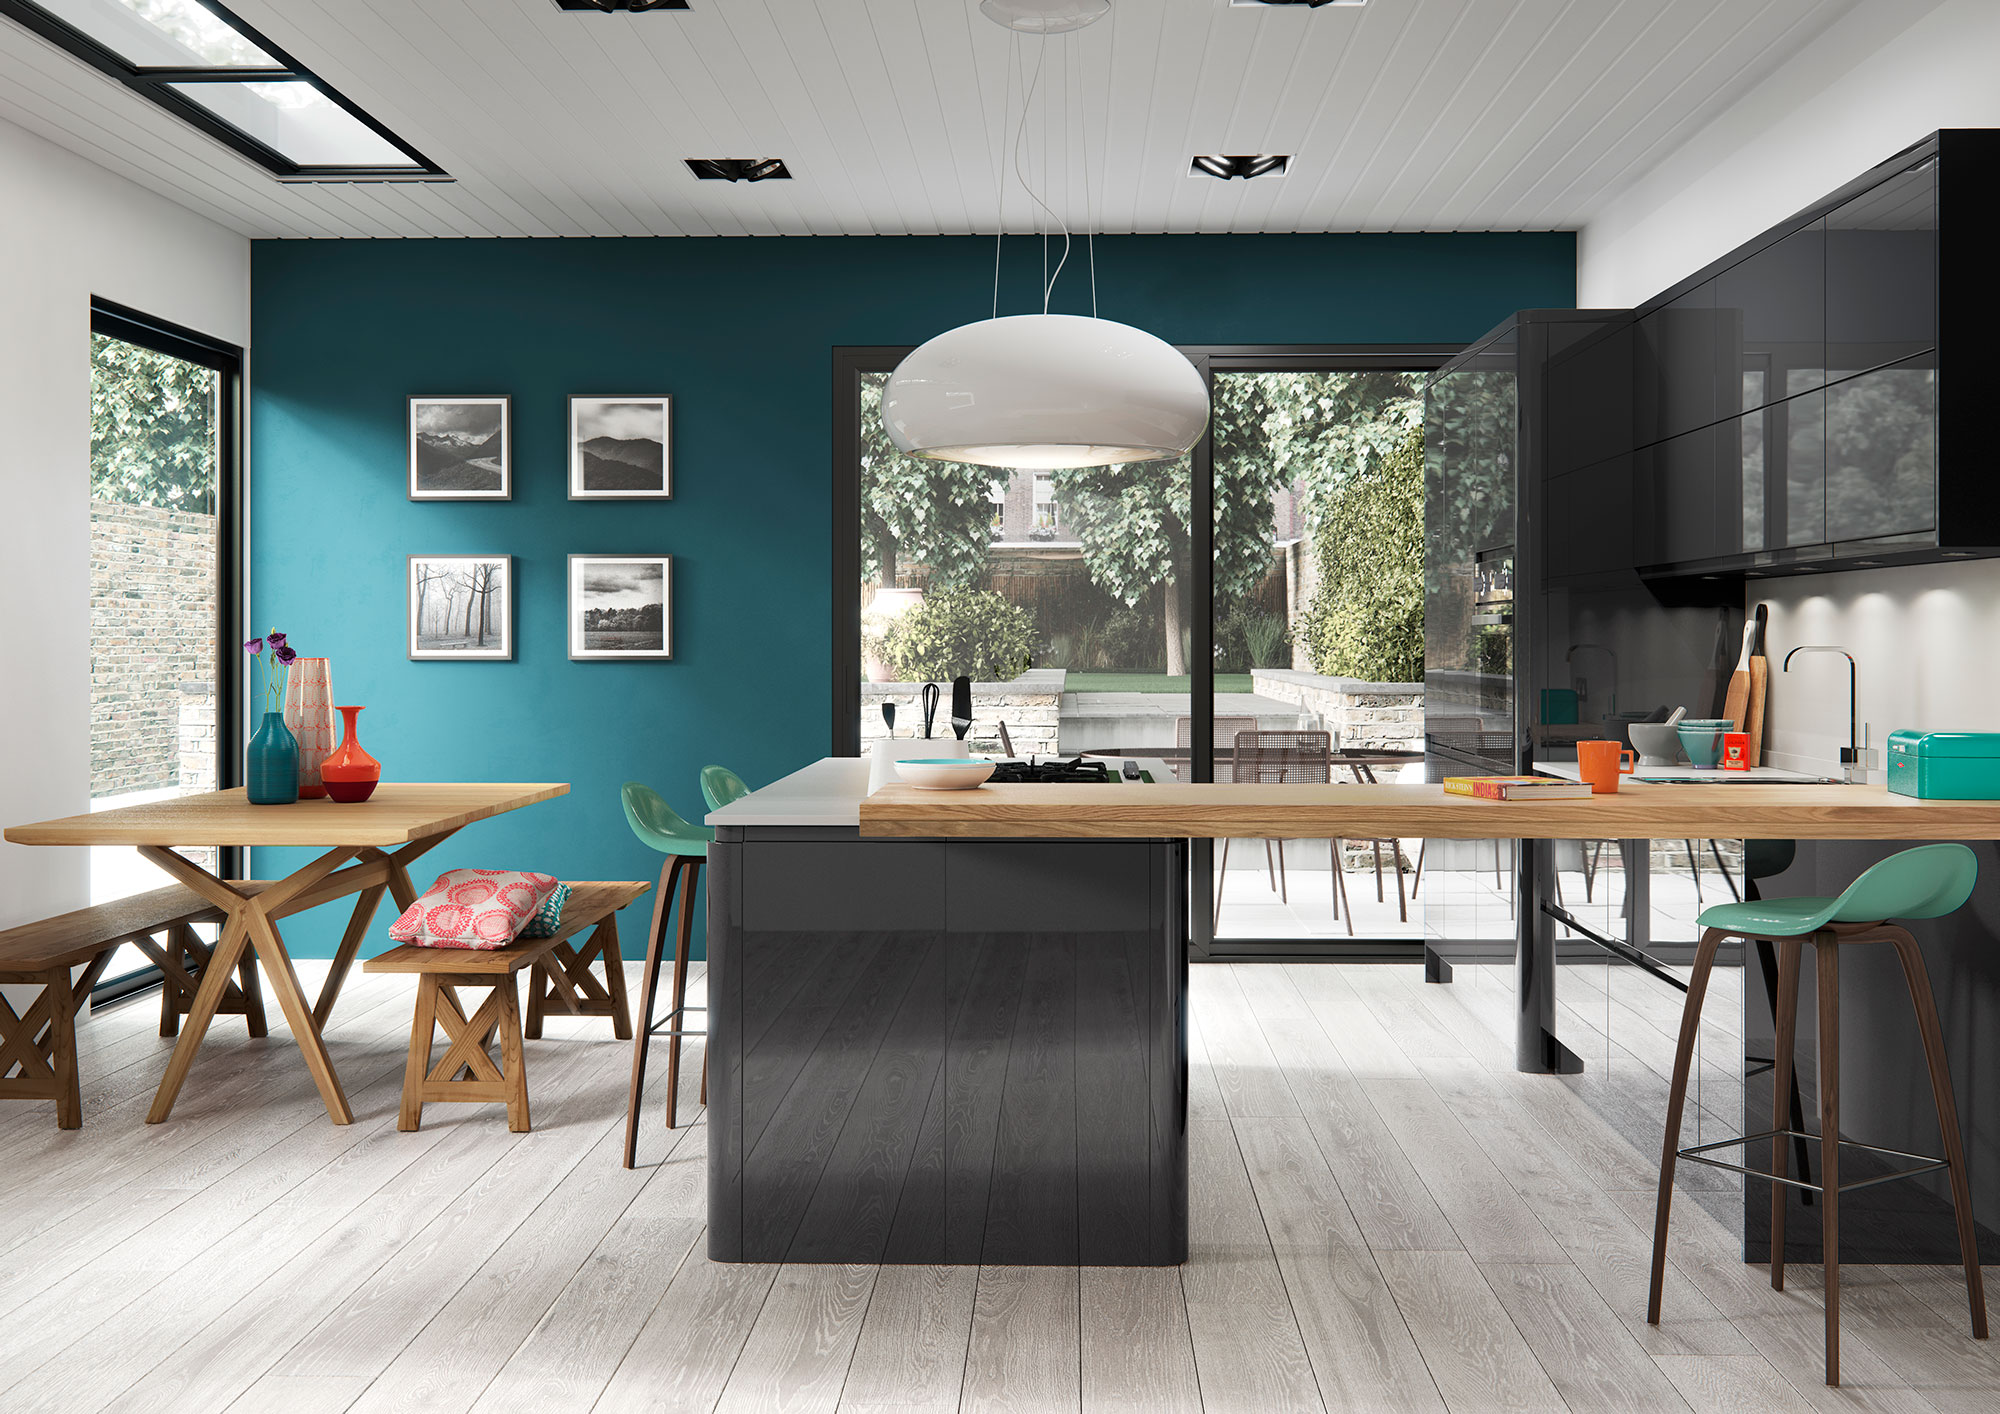 ashdowne-hand-built-kitchens-welford-graphite.jpg